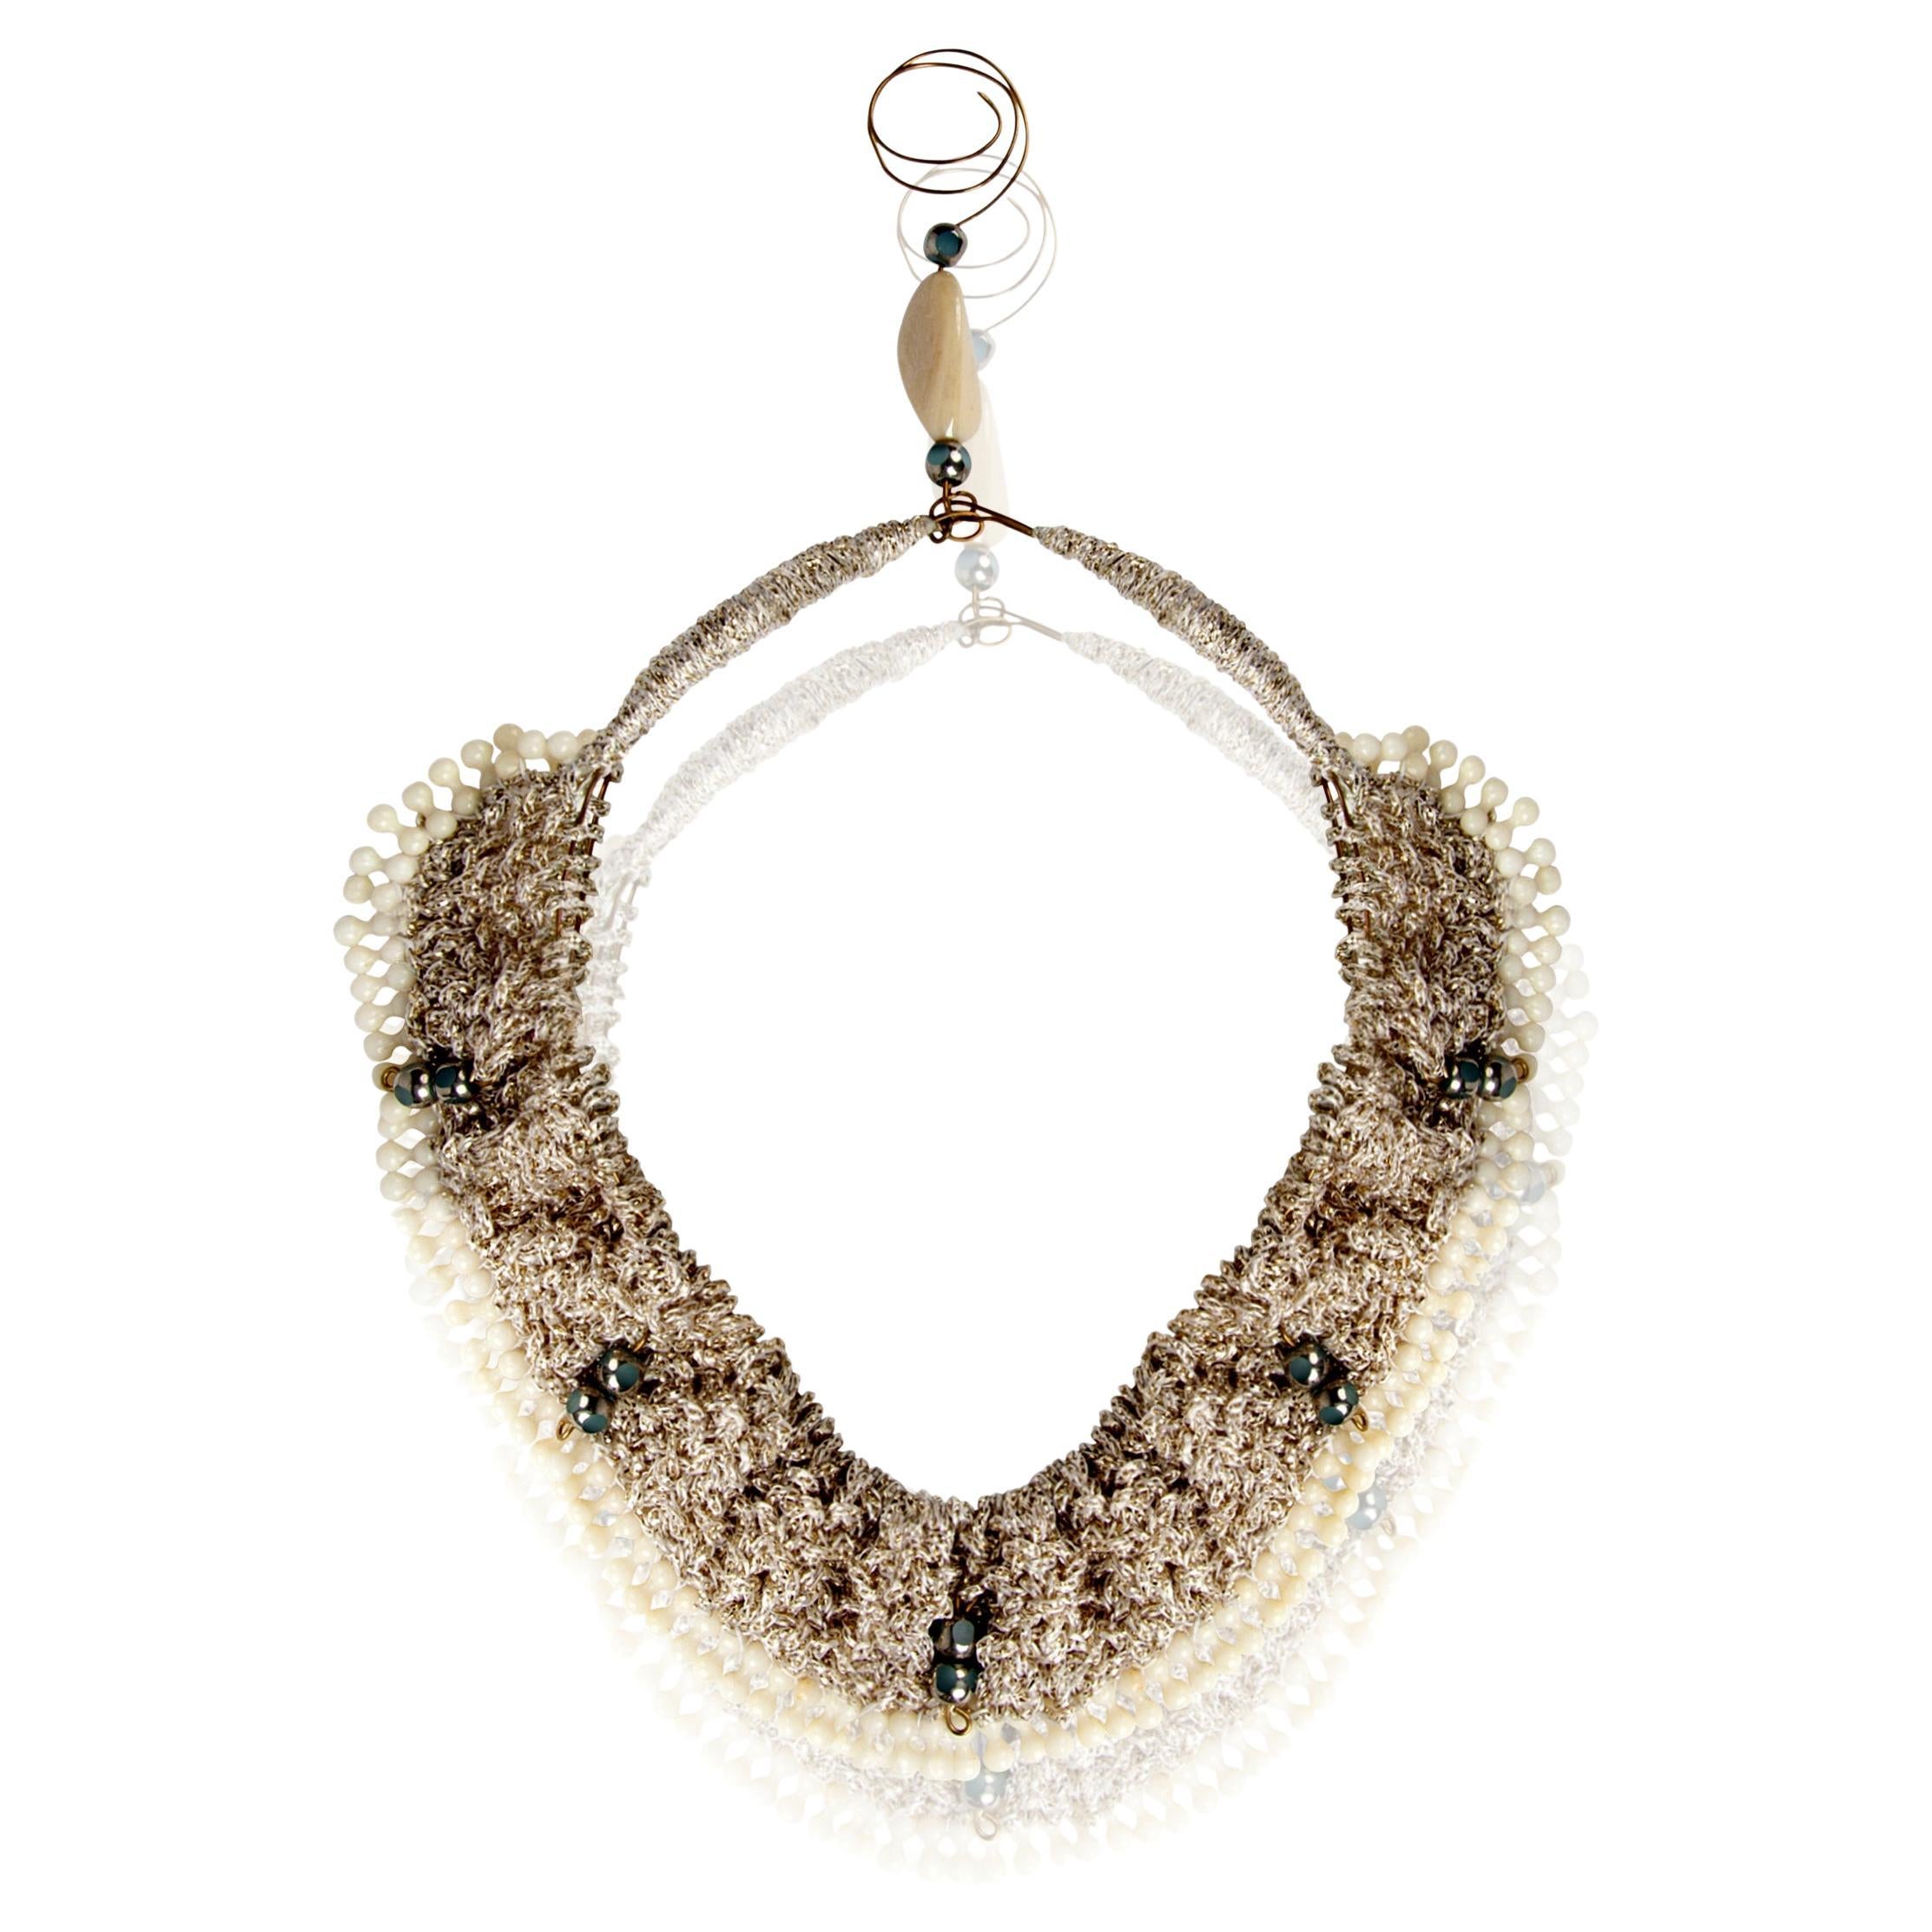 MAUKE V JEWELRY Knitted Neckpiece With Beads And Brass 